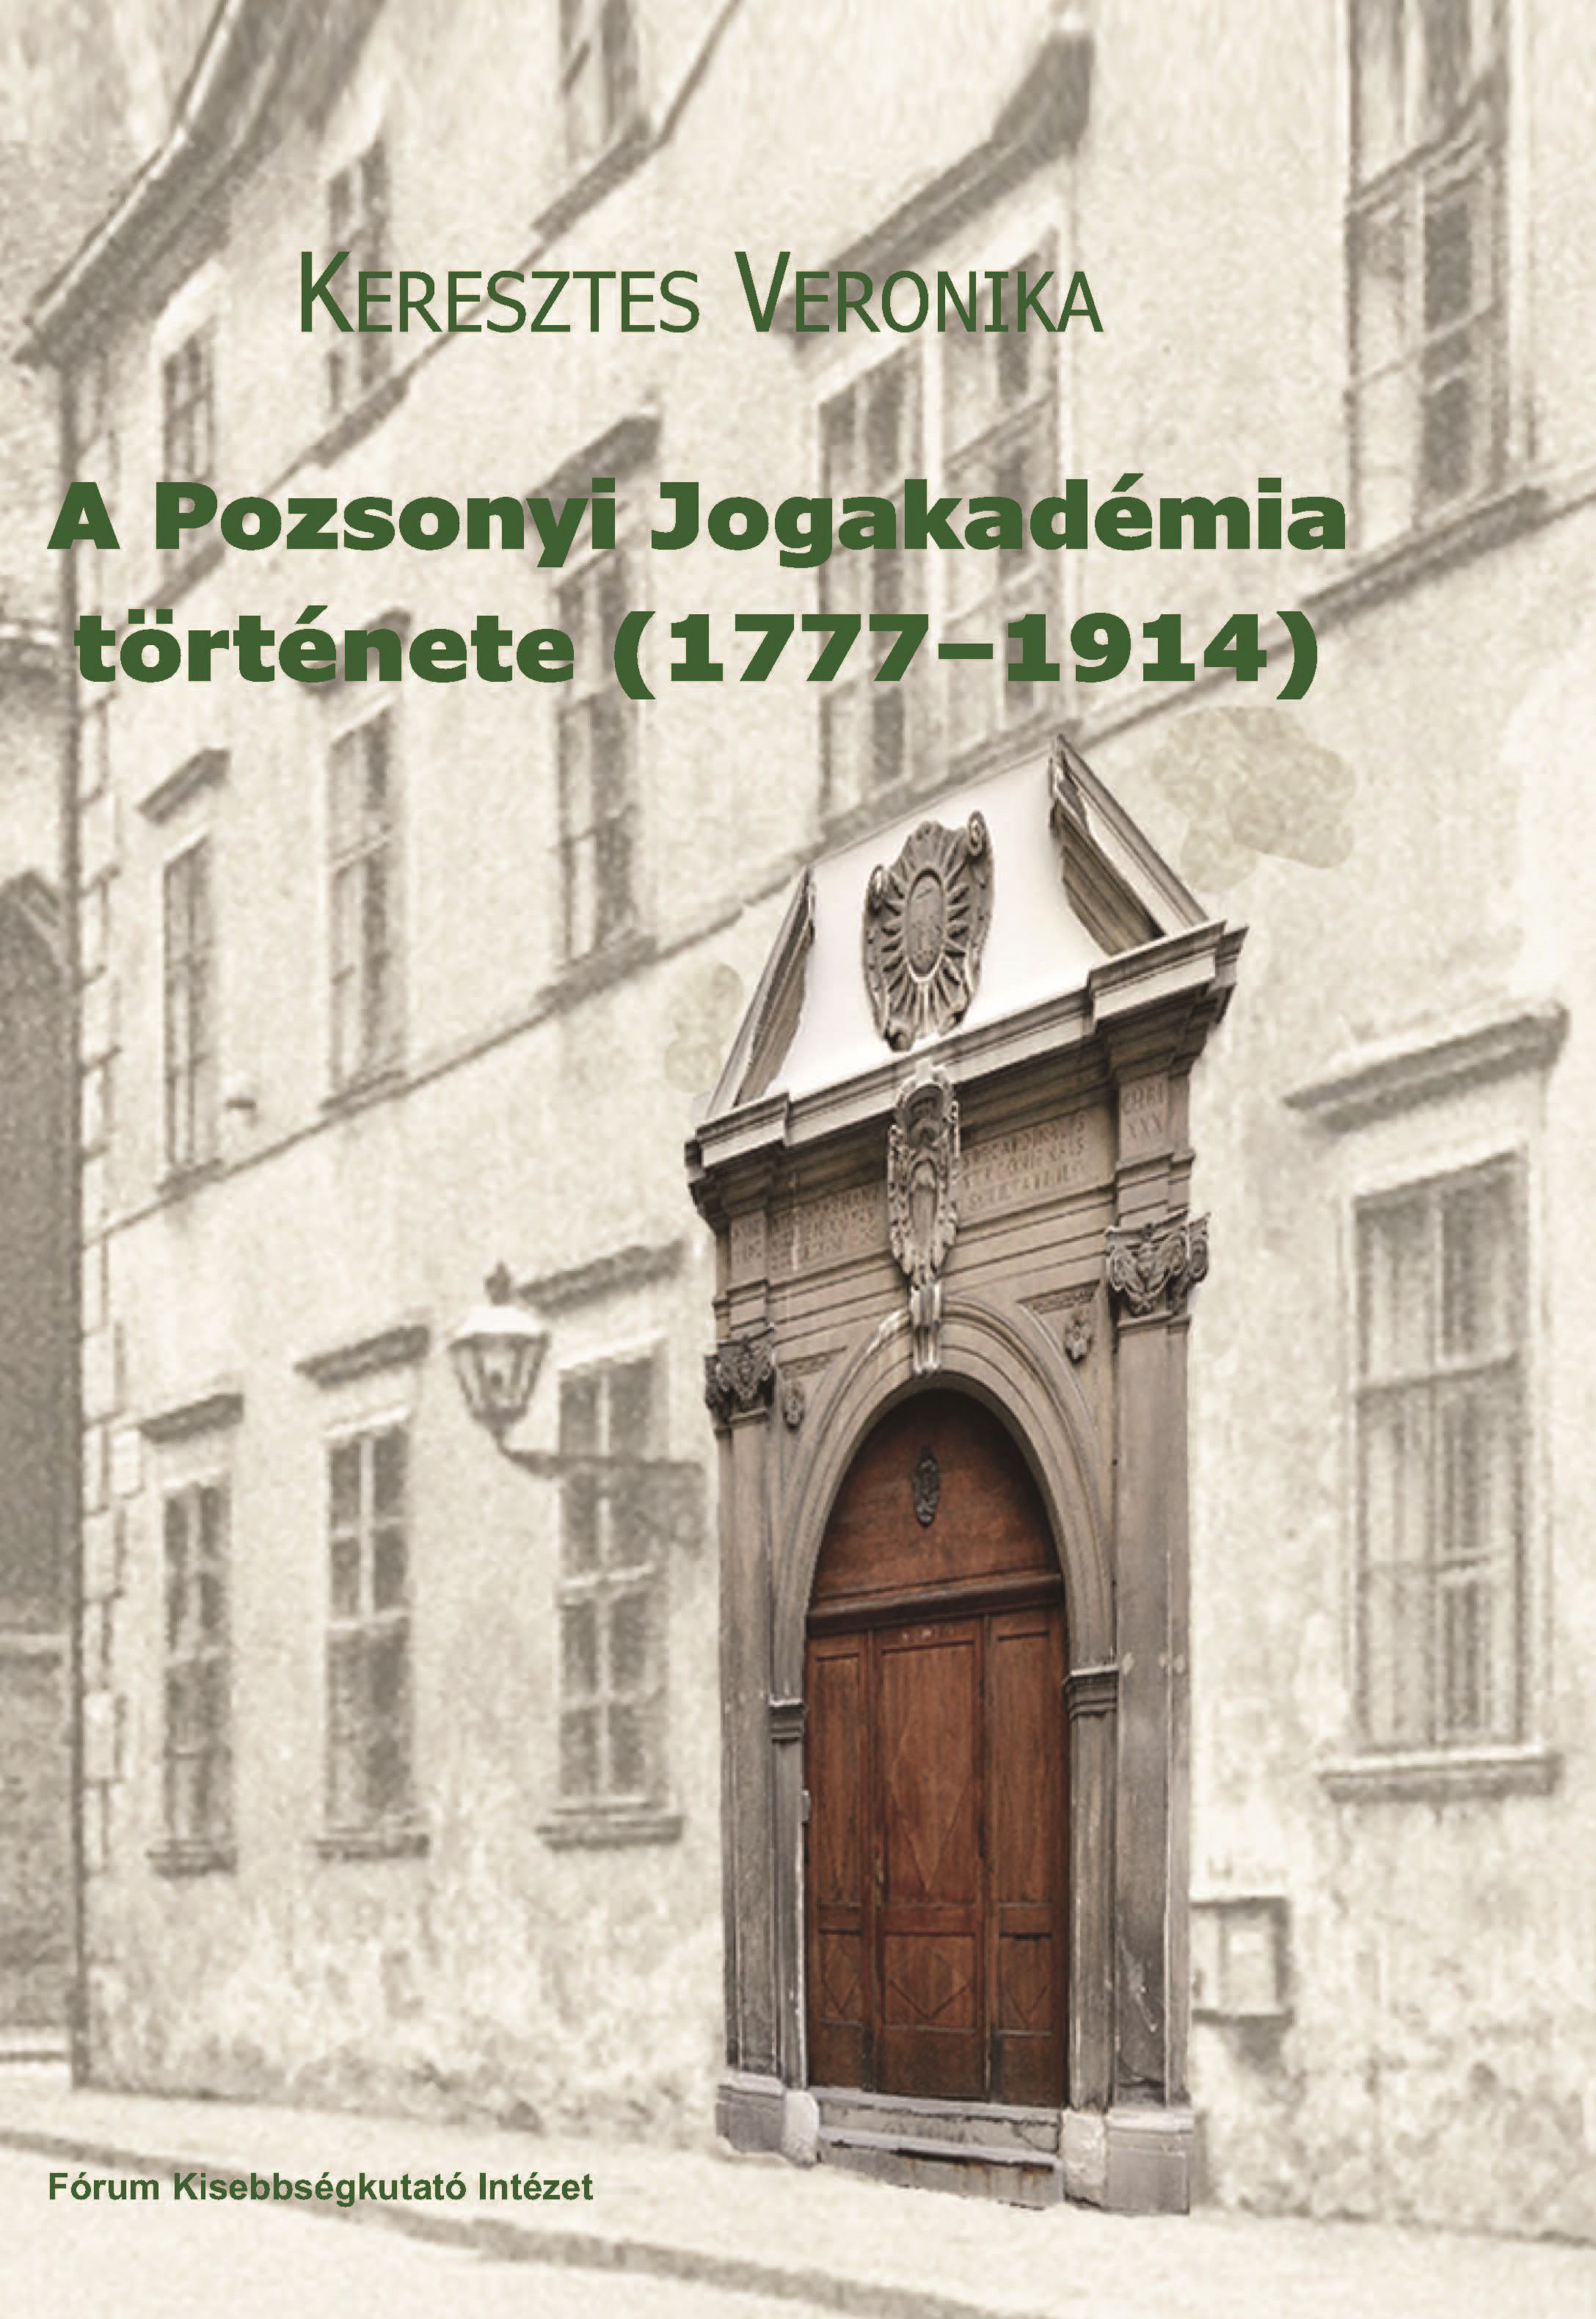 Academy of Law in Bratislava 1777–1914